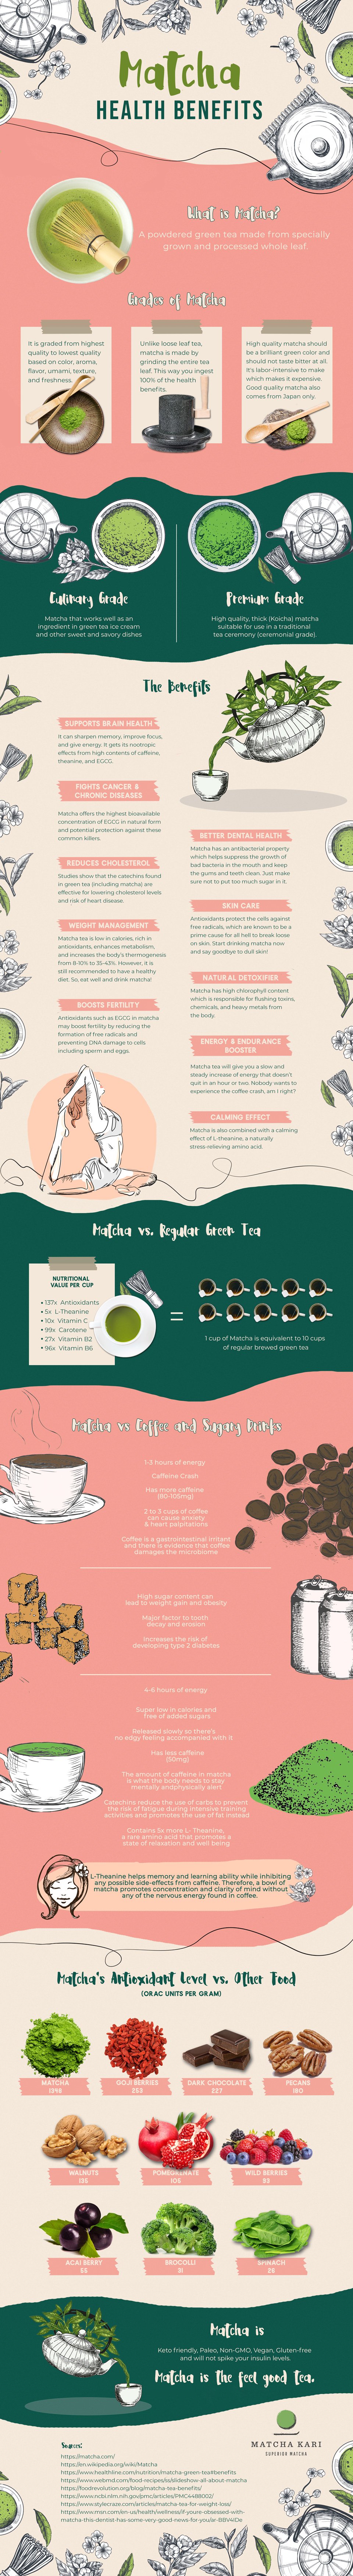 matcha infographic